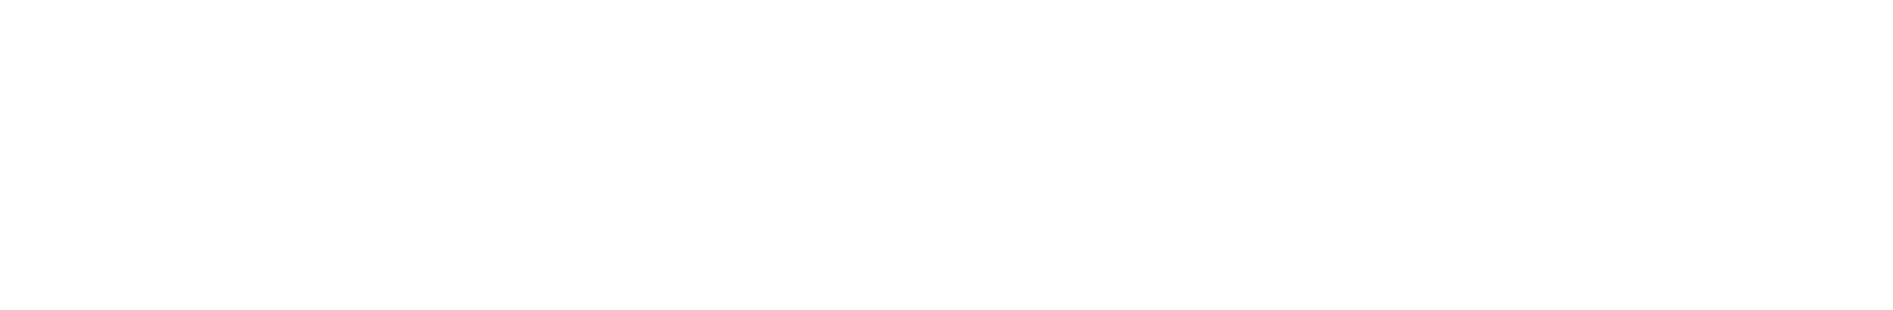 Novartis logo grand pour les fonds sombres (PNG transparent)